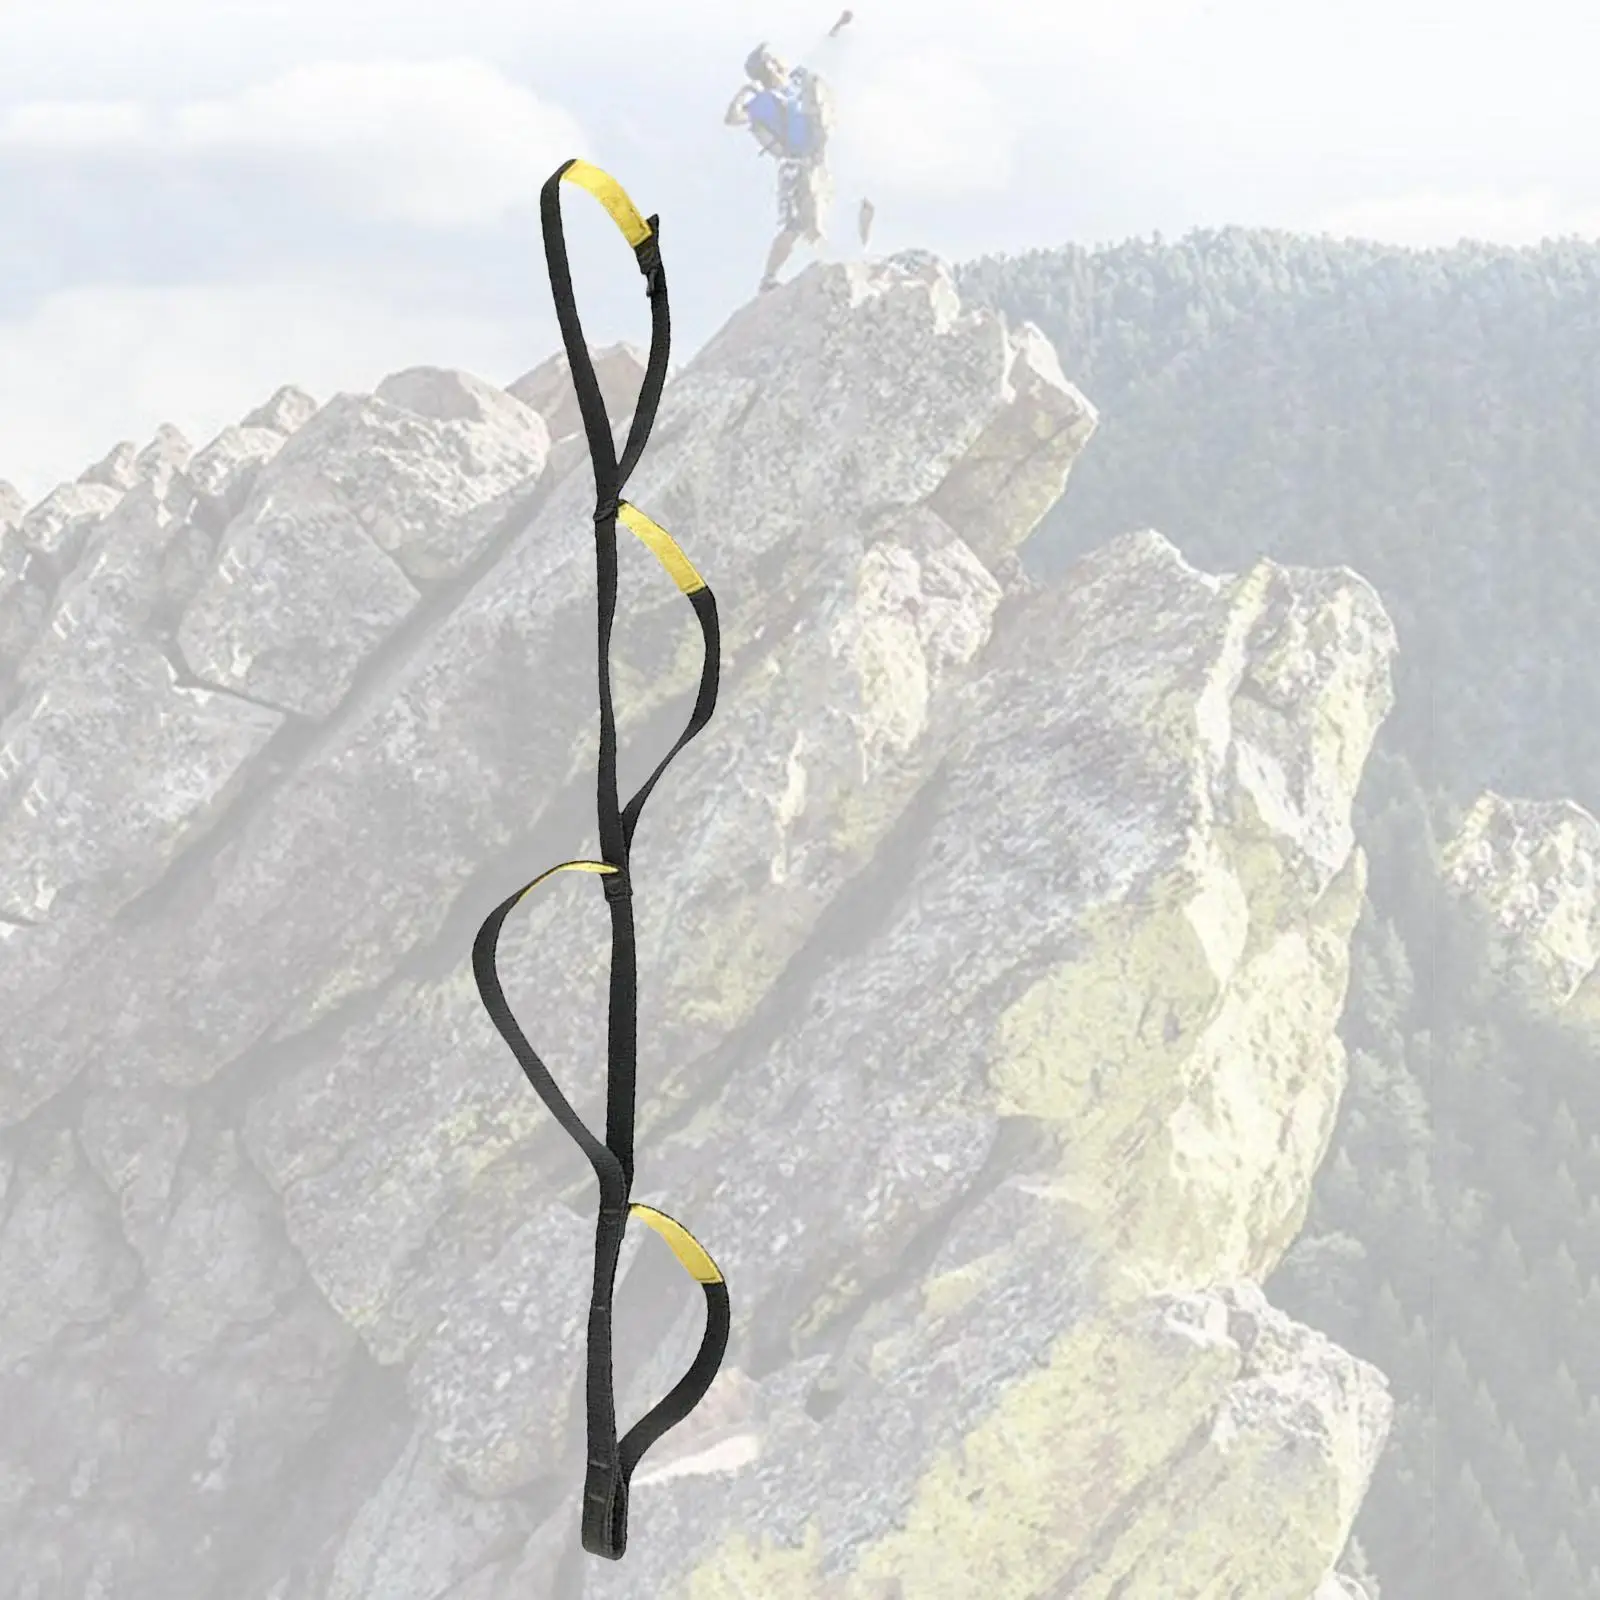 4 Step Webbing Strap Ladder Gear Equipment Outdoor Ascending 110cm Climbing Rope